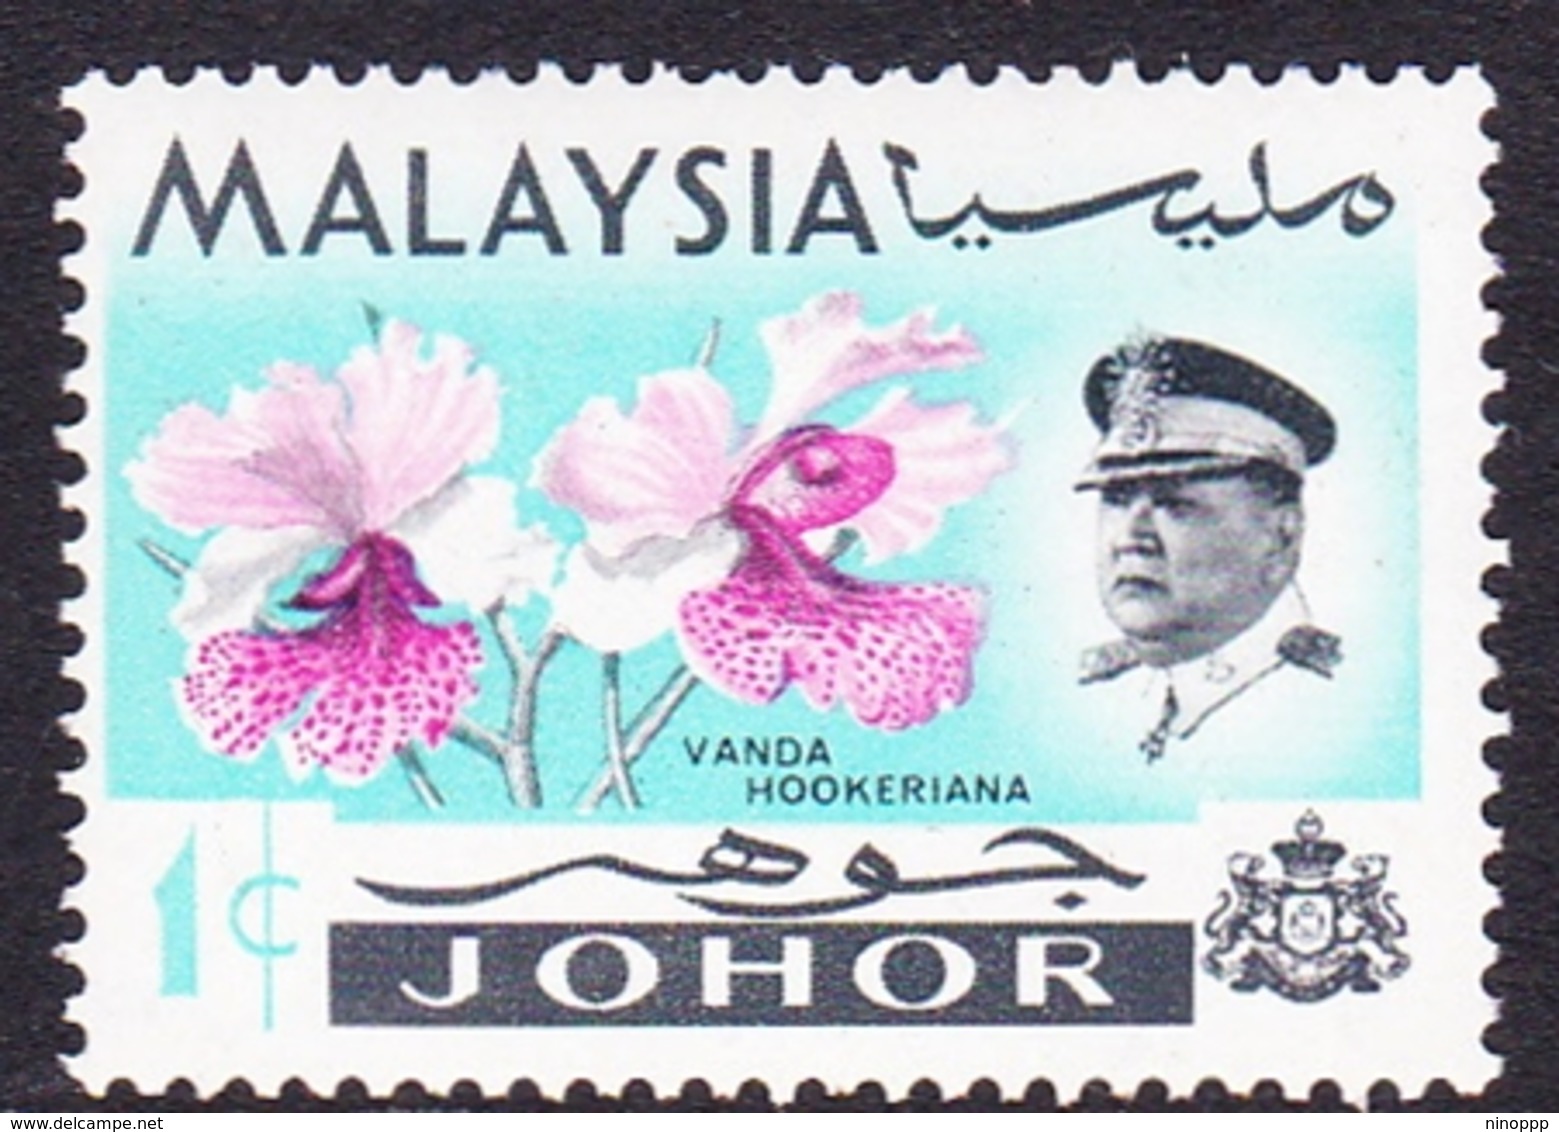 Malaysia-Johore SG 166 1965 Sultan Ismail, 1c, Mint Never Hinged - Johore